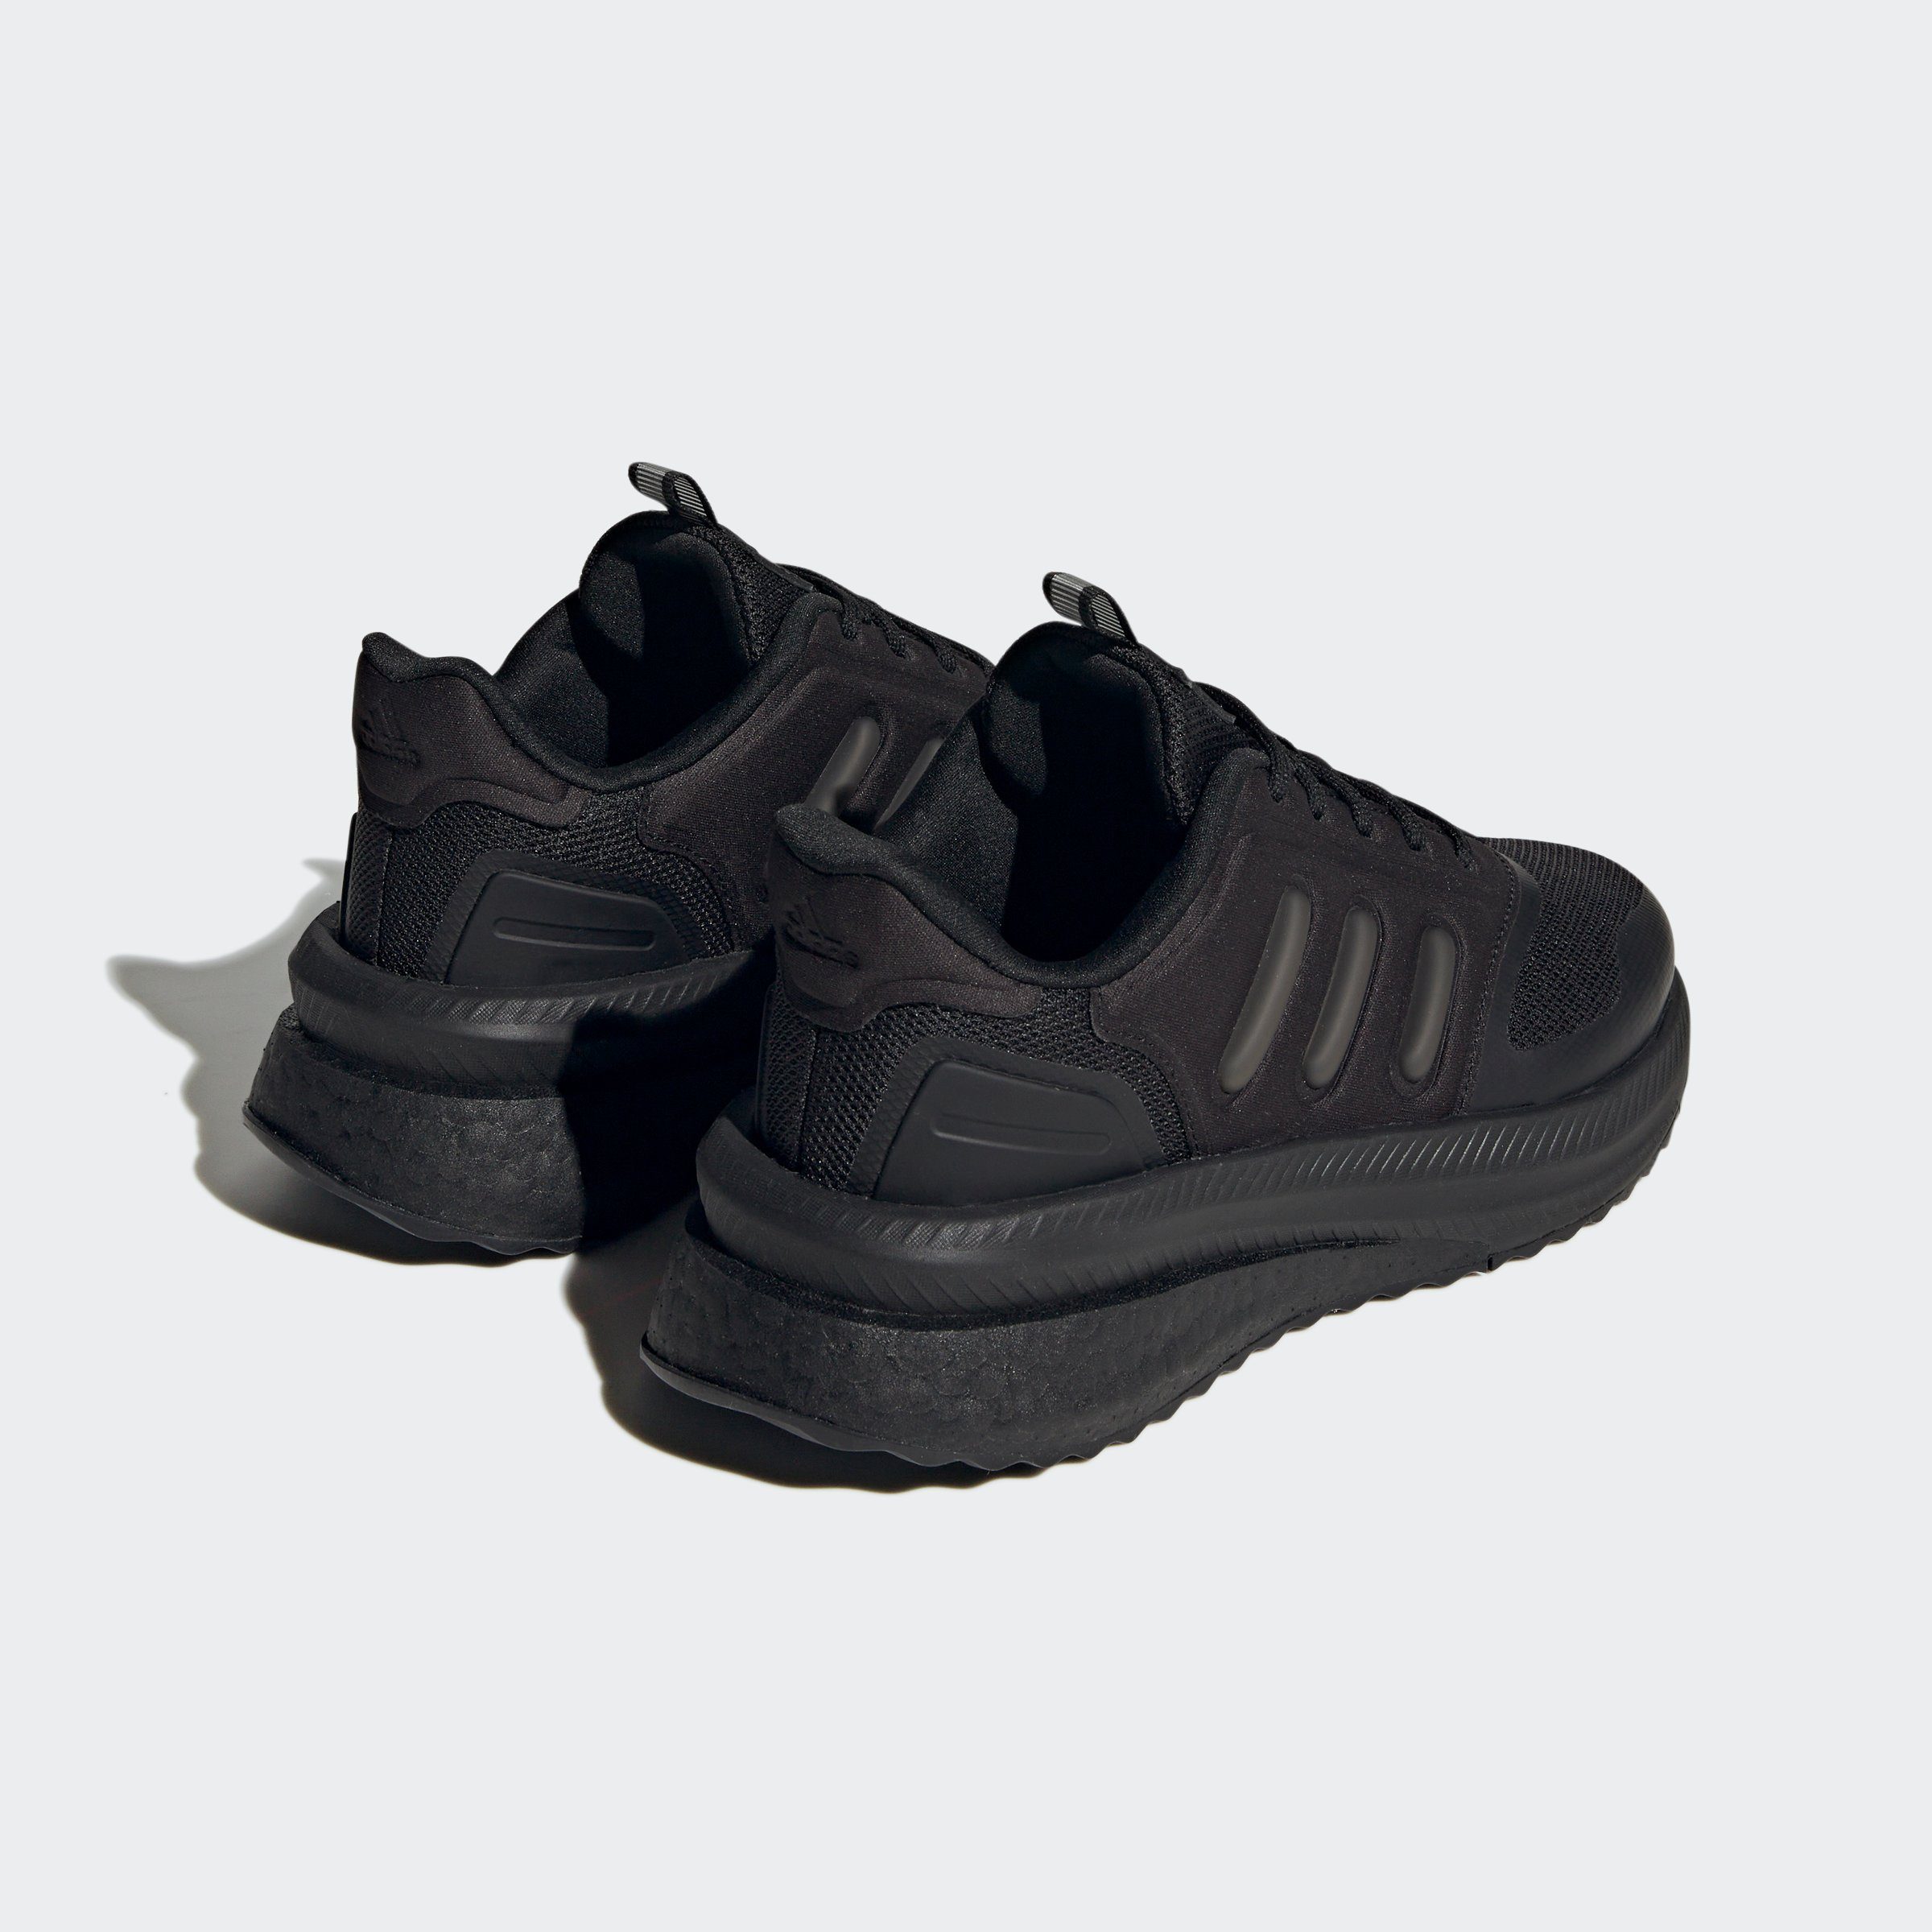 Black / Sneaker Sportswear / PHASE Core Black Black Core Core X_PLR adidas